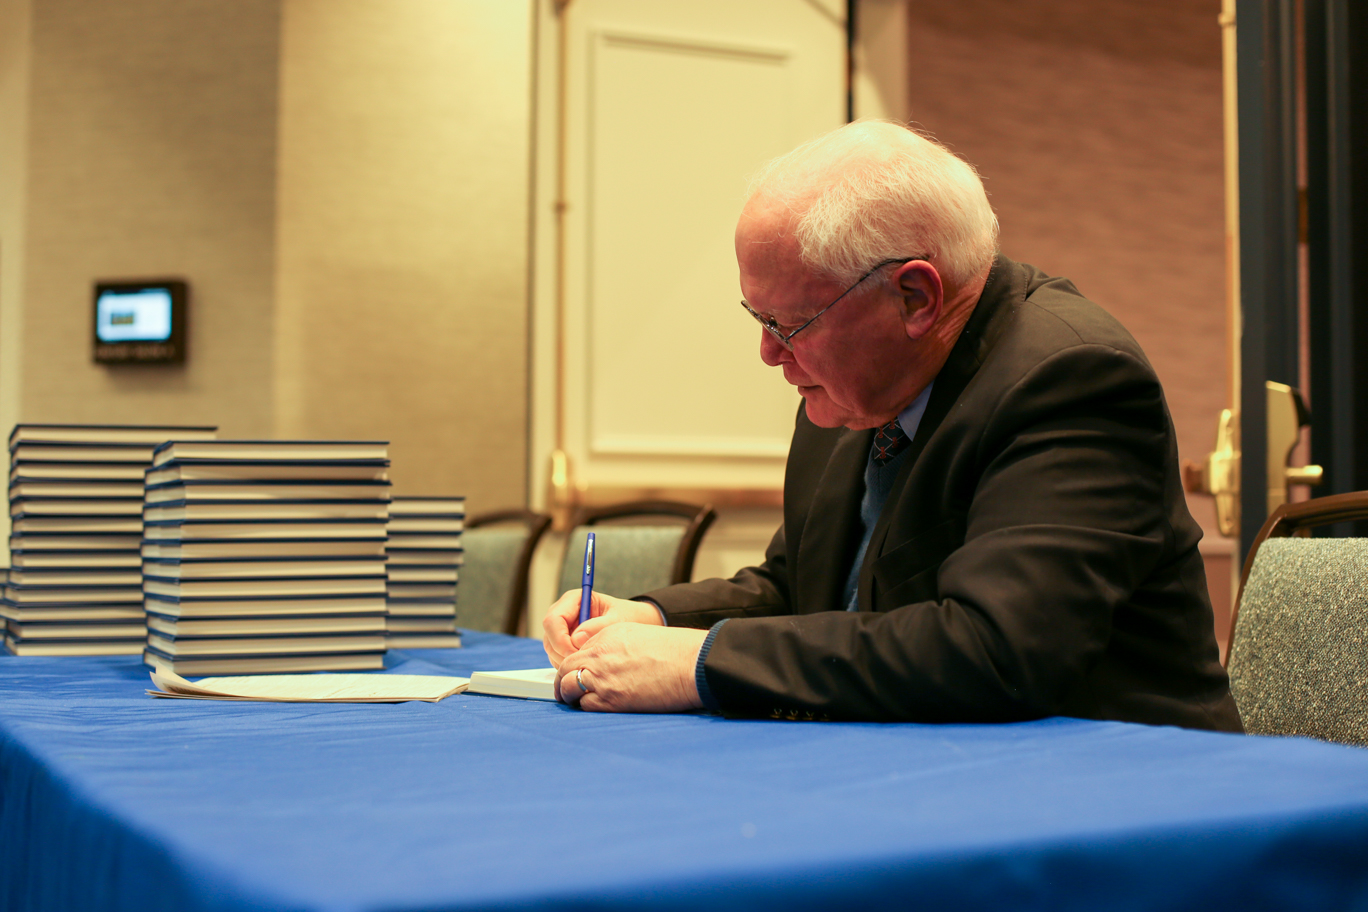 David Lawrence Jr. signing books at a table.